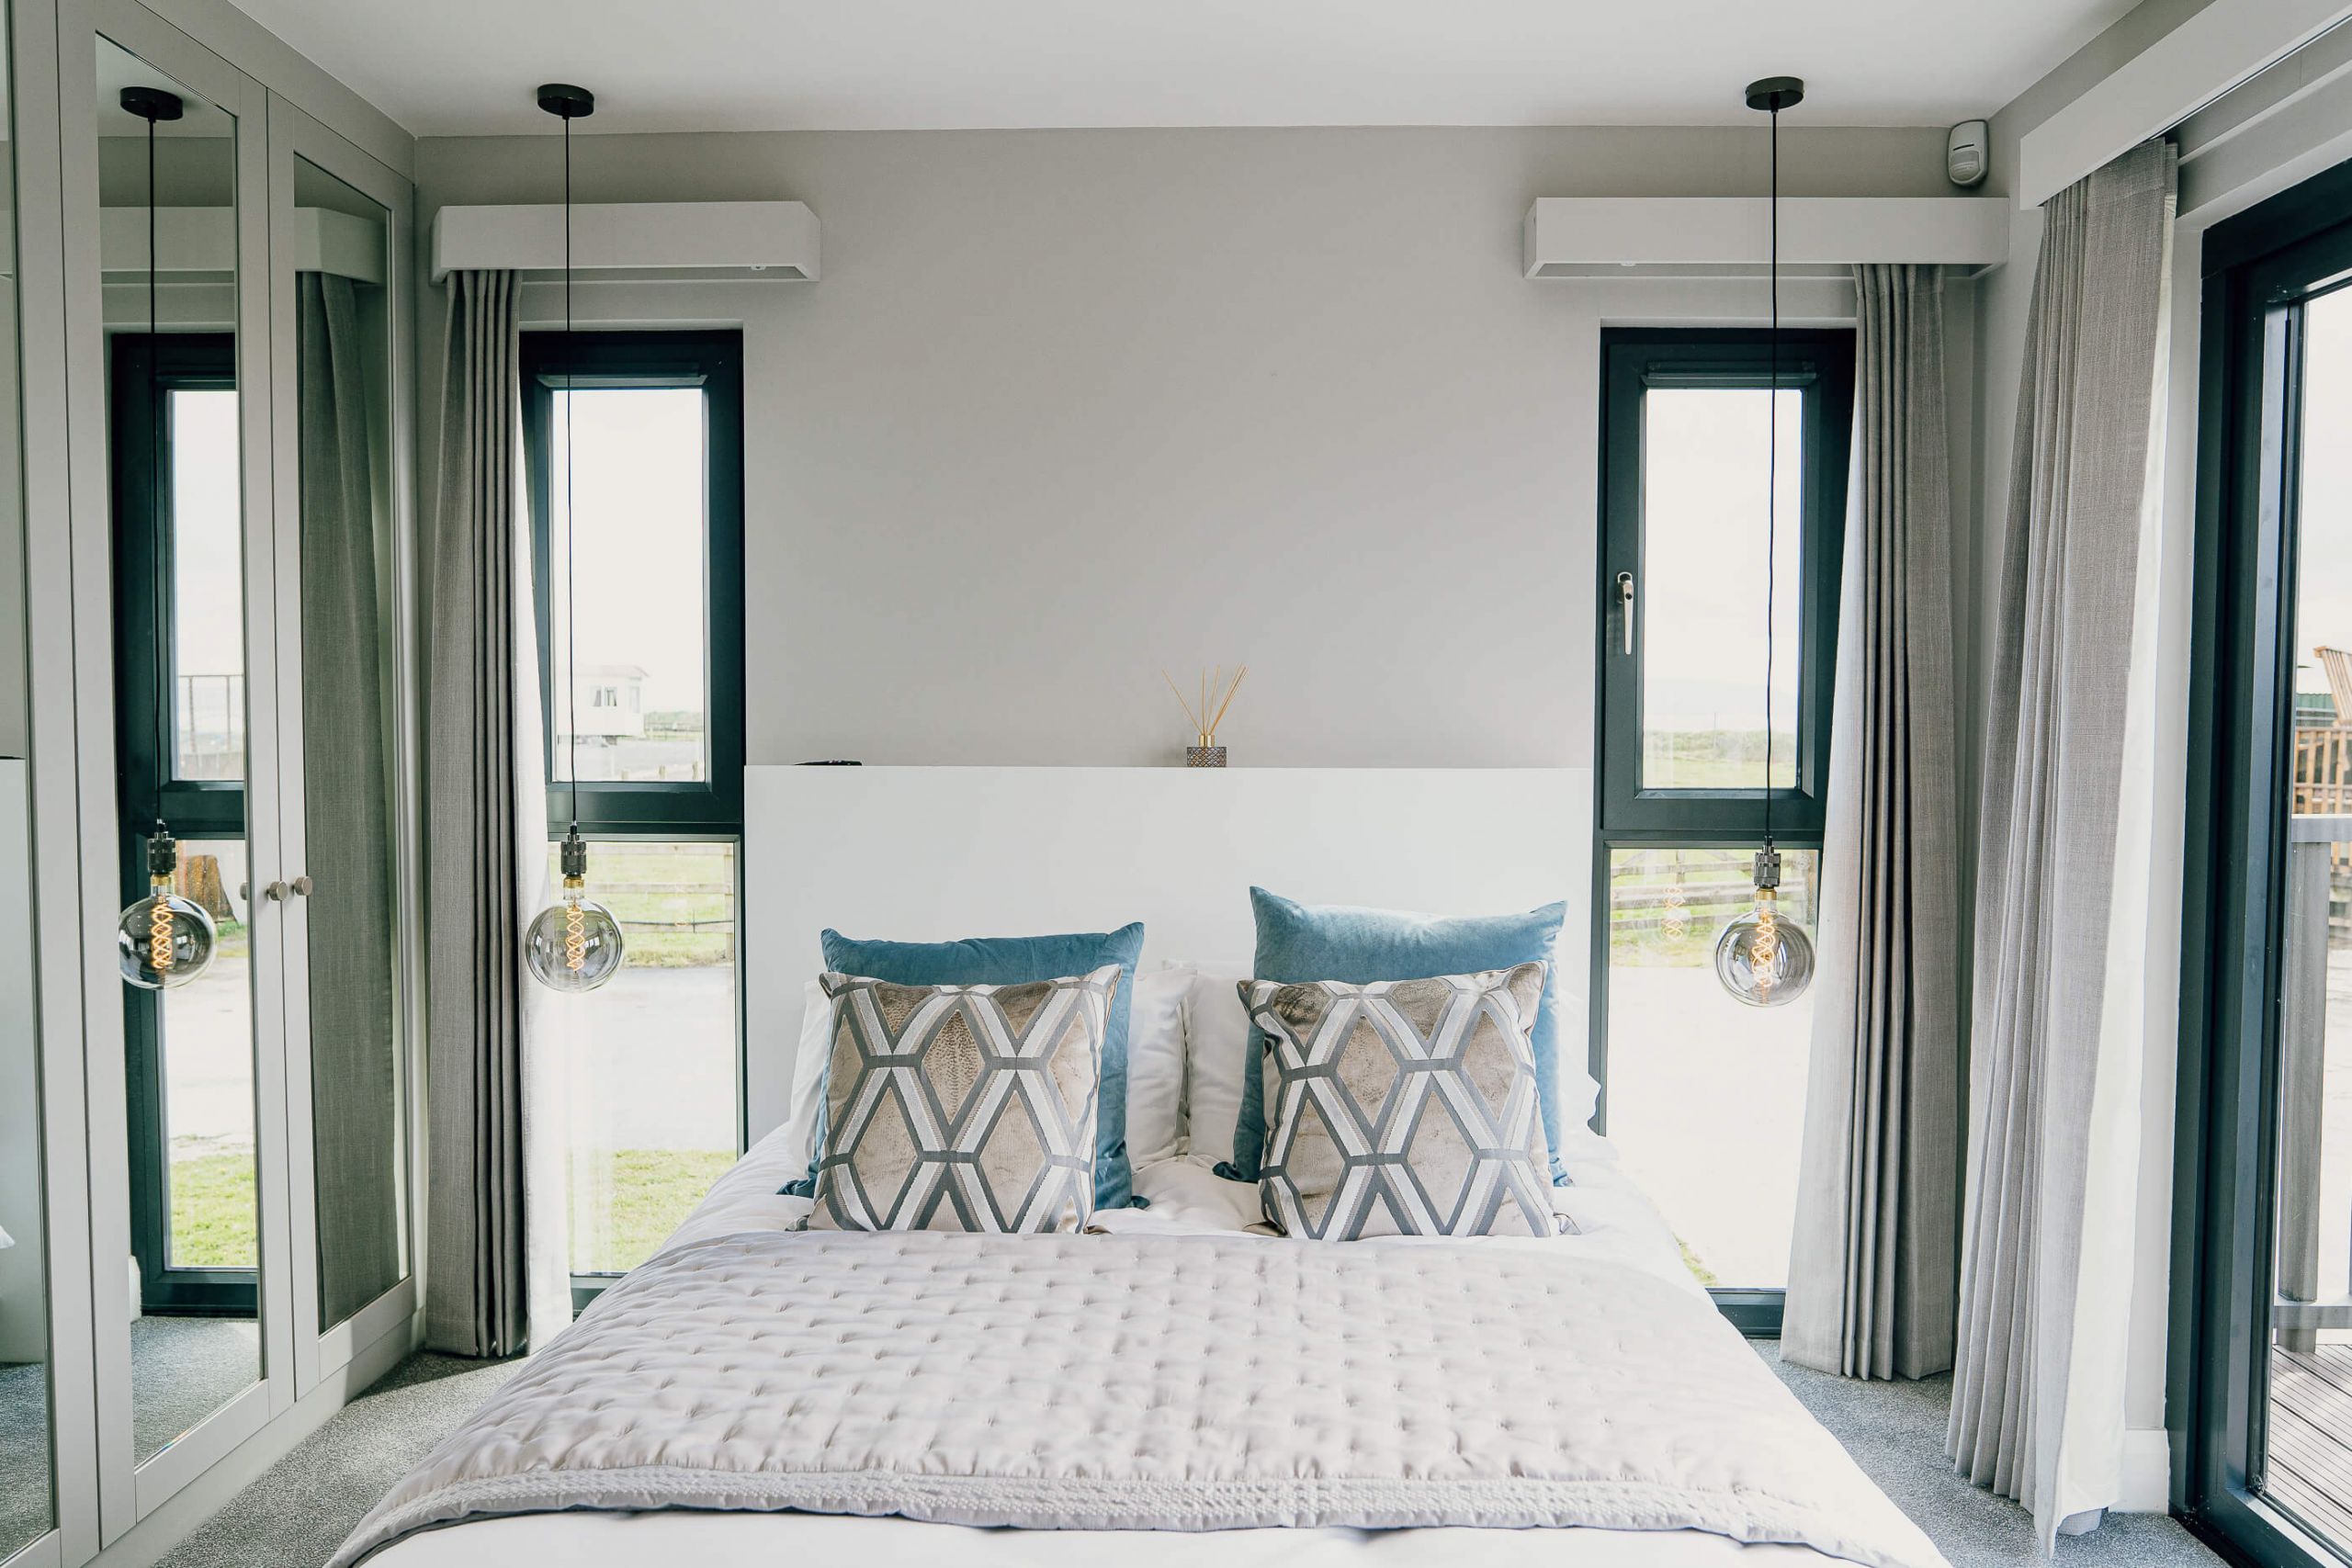 KES Group double bedroom turnkey home luxury lights windows cushions